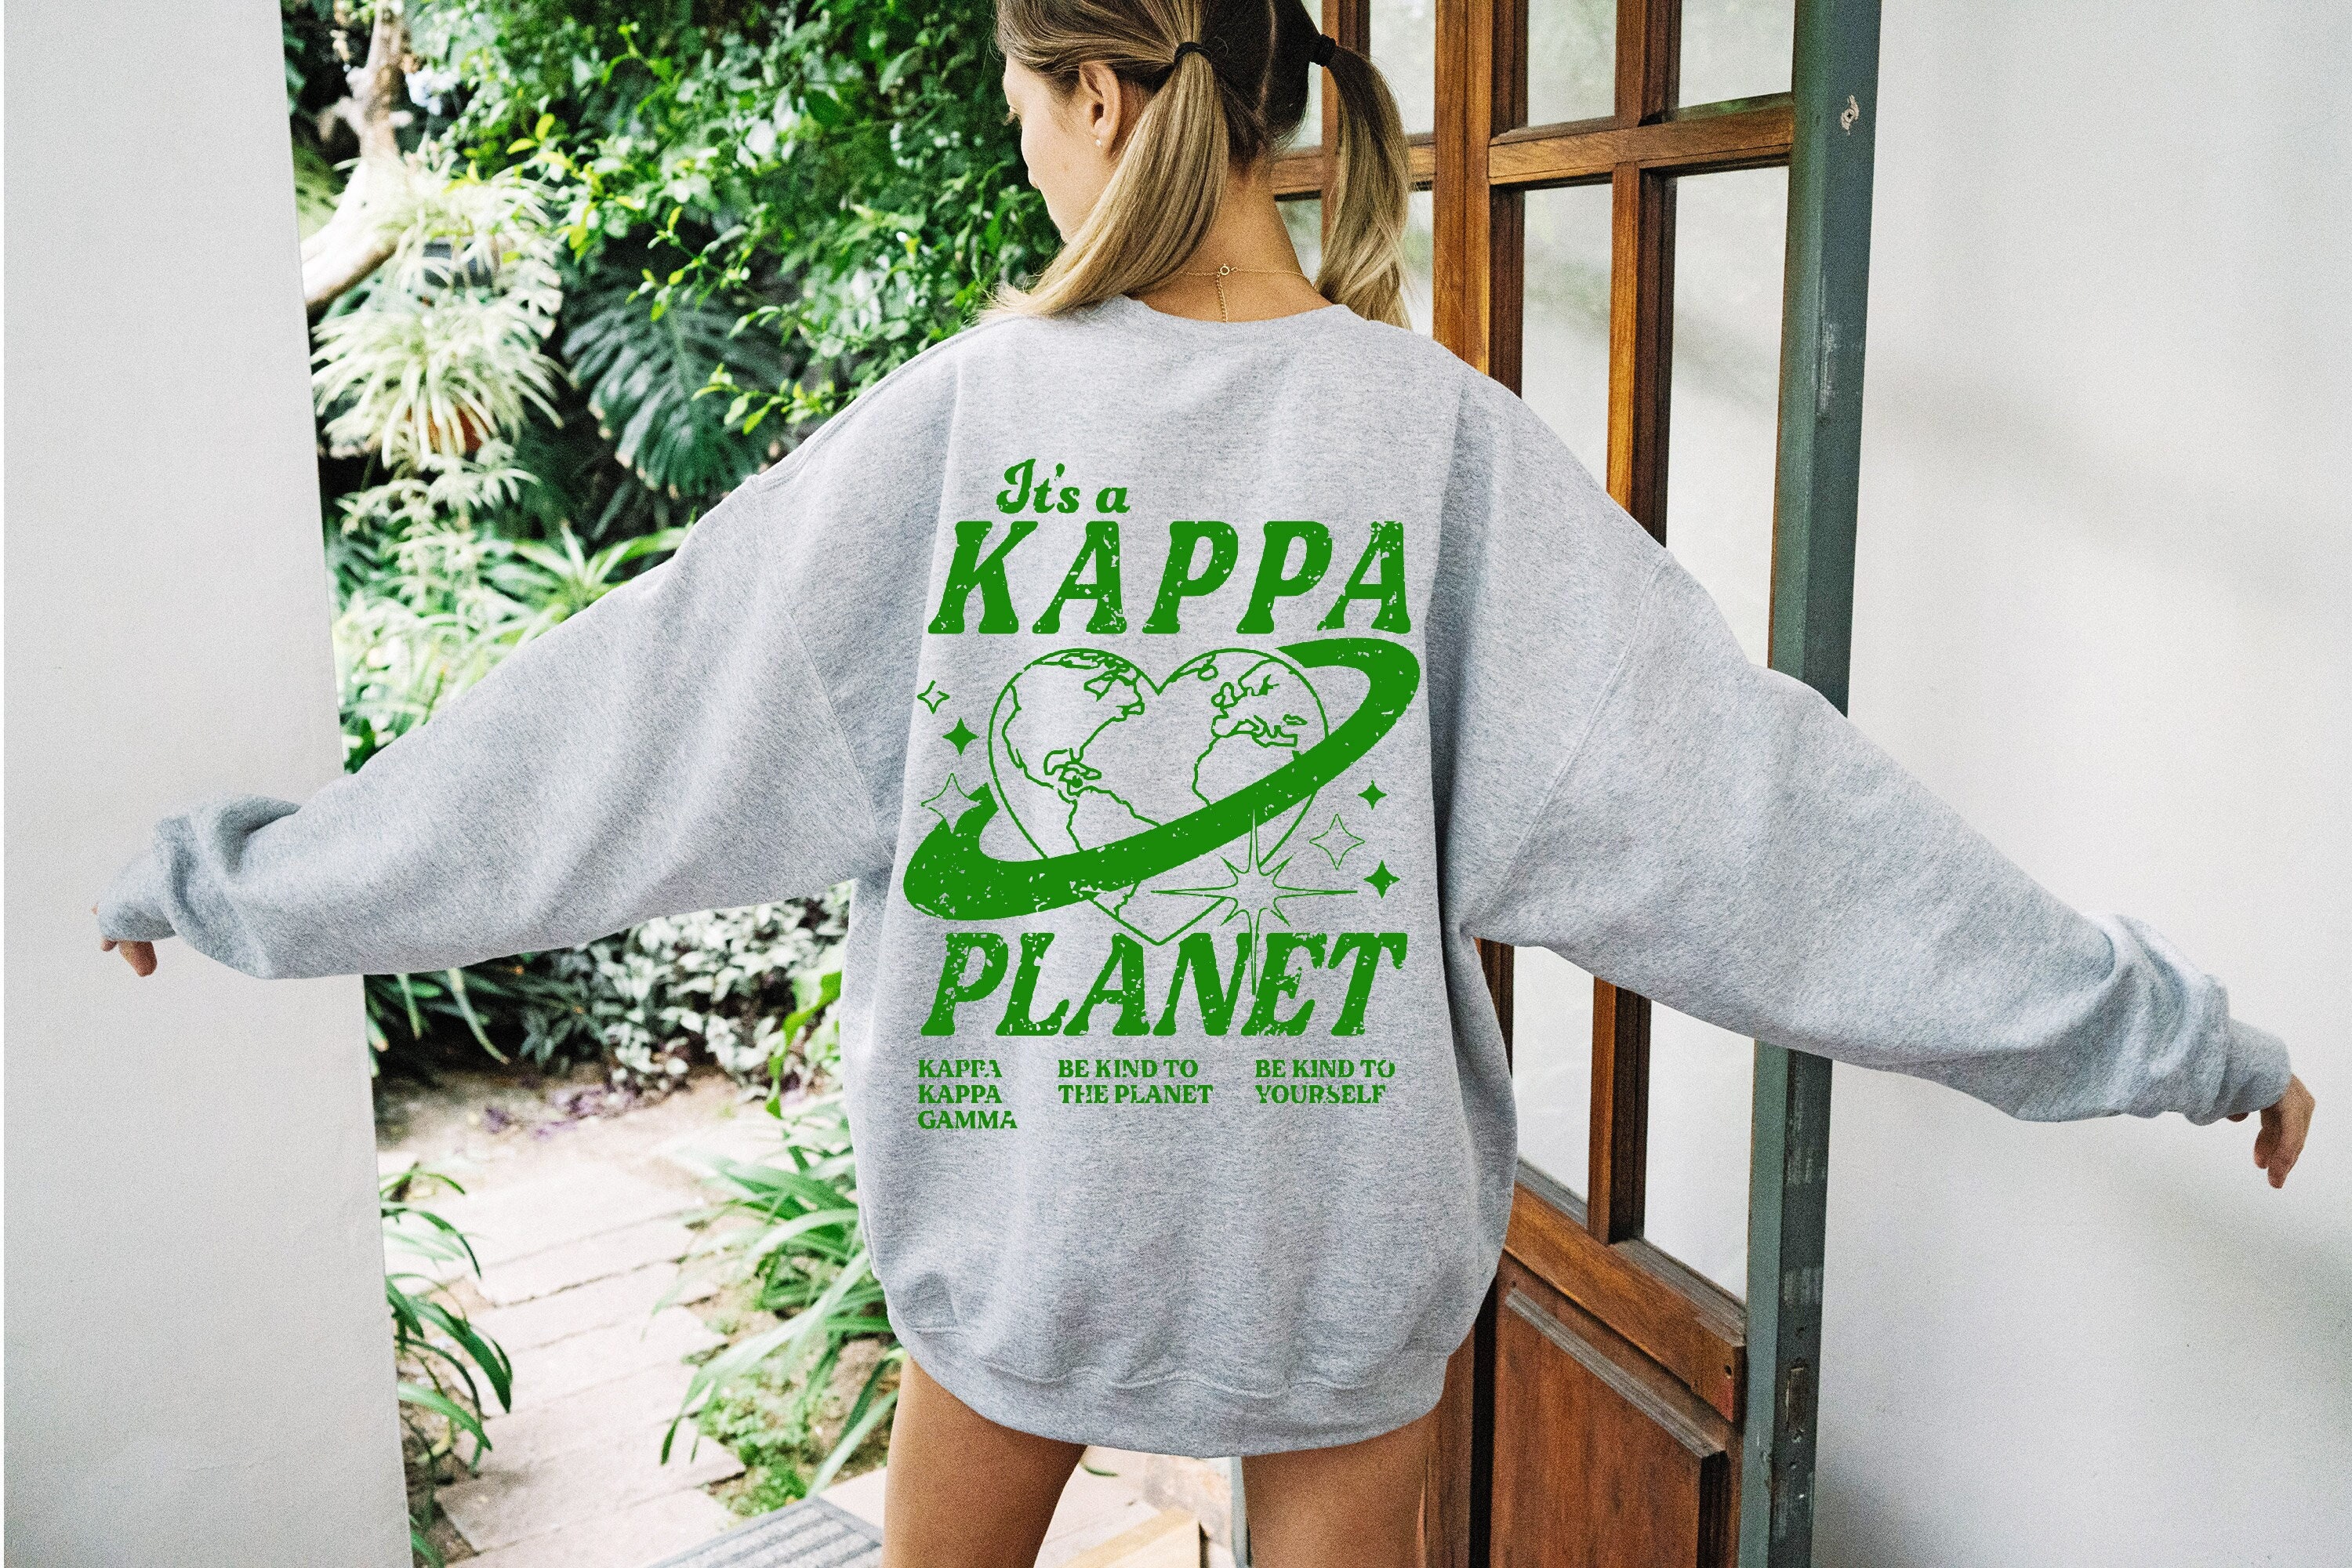 Kappa to Sweatshirt Crewneck Comfy Sorority Planet Sweatshirt Kappa Trendy - Life Kappa Etsy Kind Crewneck the Greek Gift Gamma Be